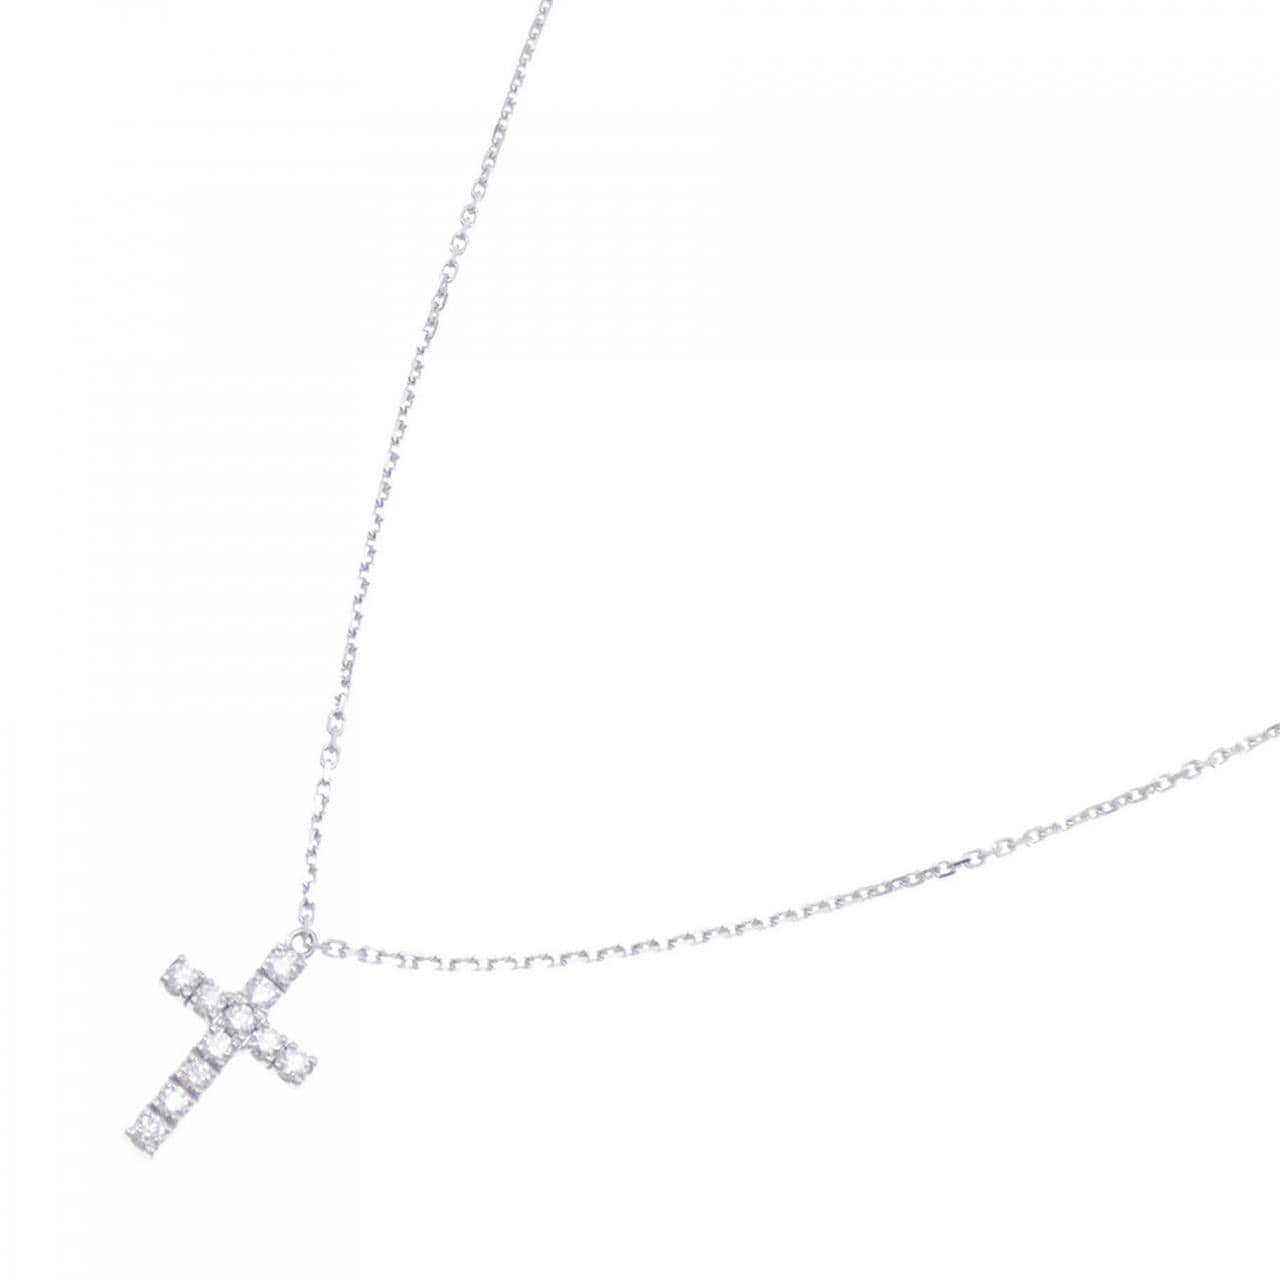 Cartier cross necklace